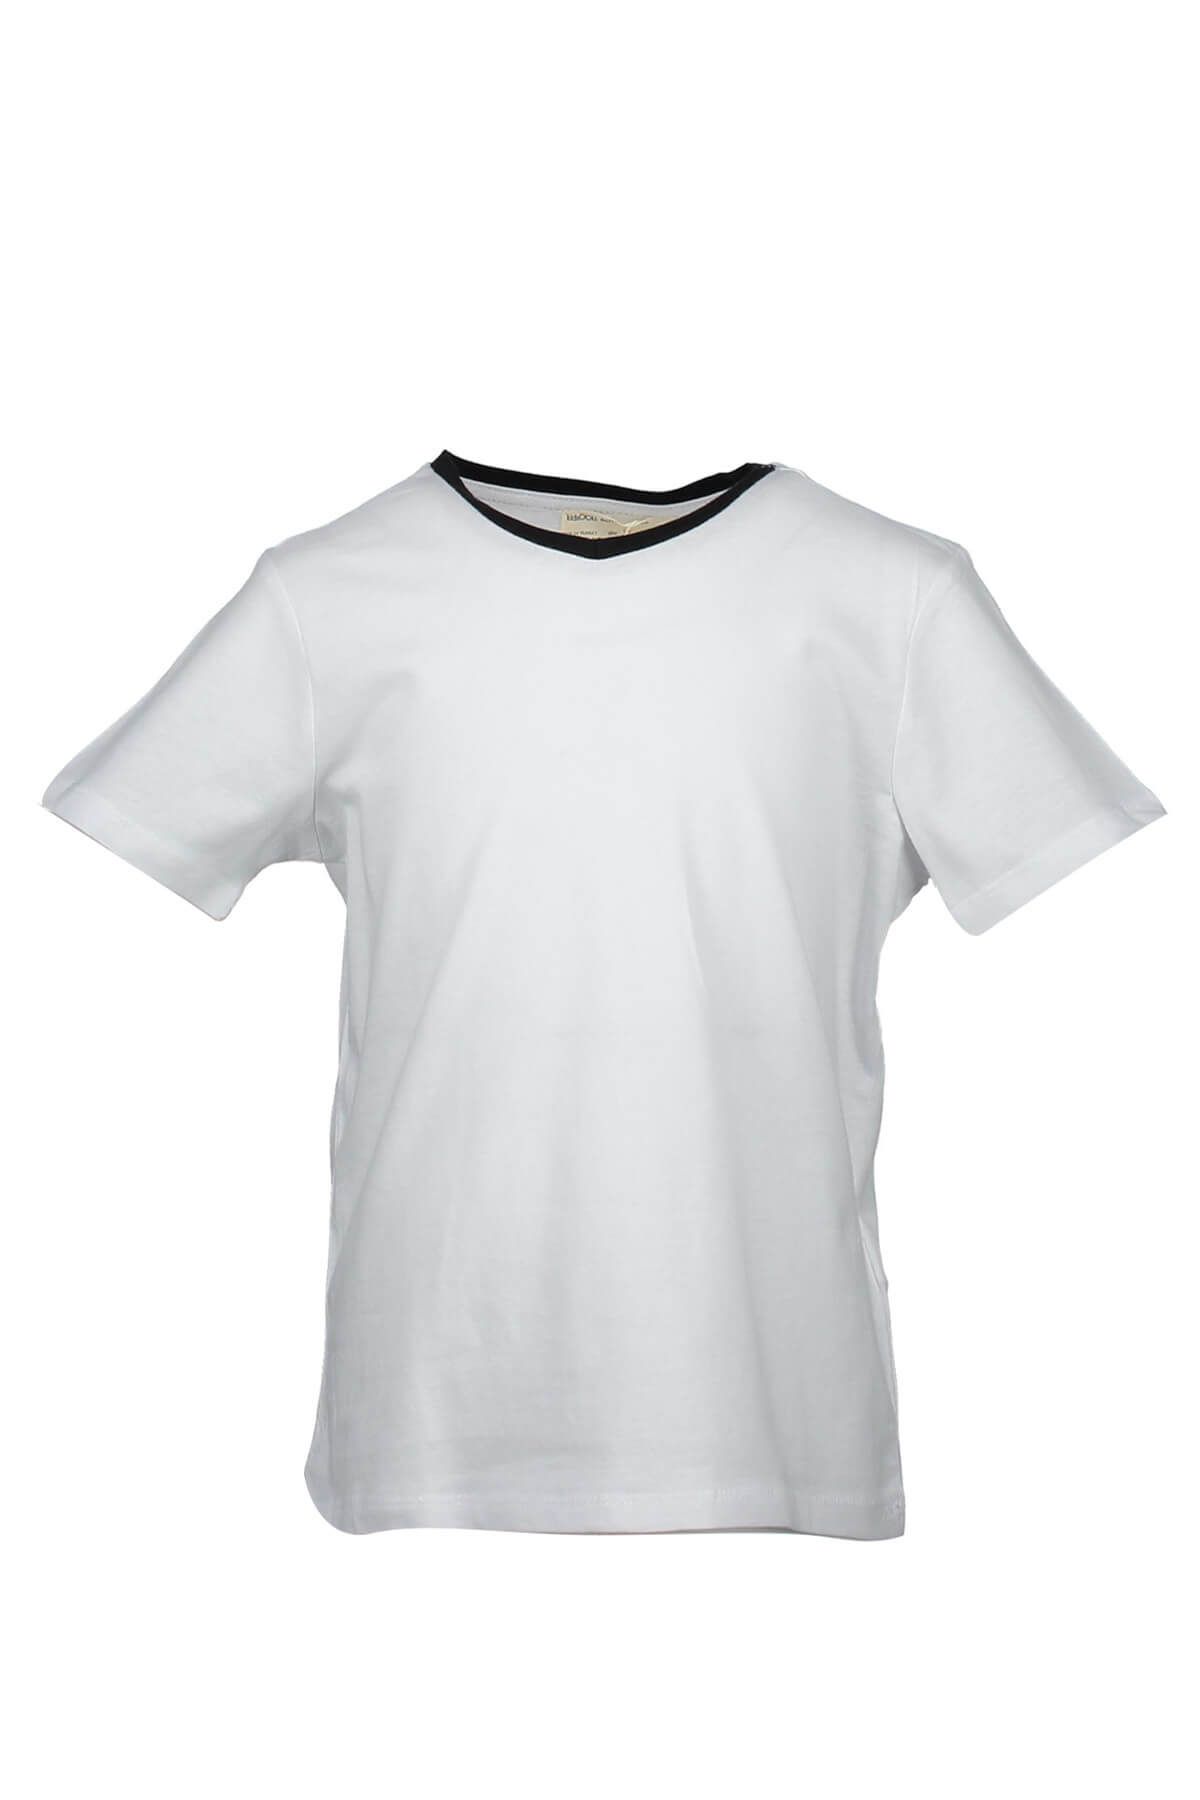 Collezione Erkek Çocuk Beyaz T-Shirt Kisa Kol - UKE140219A52